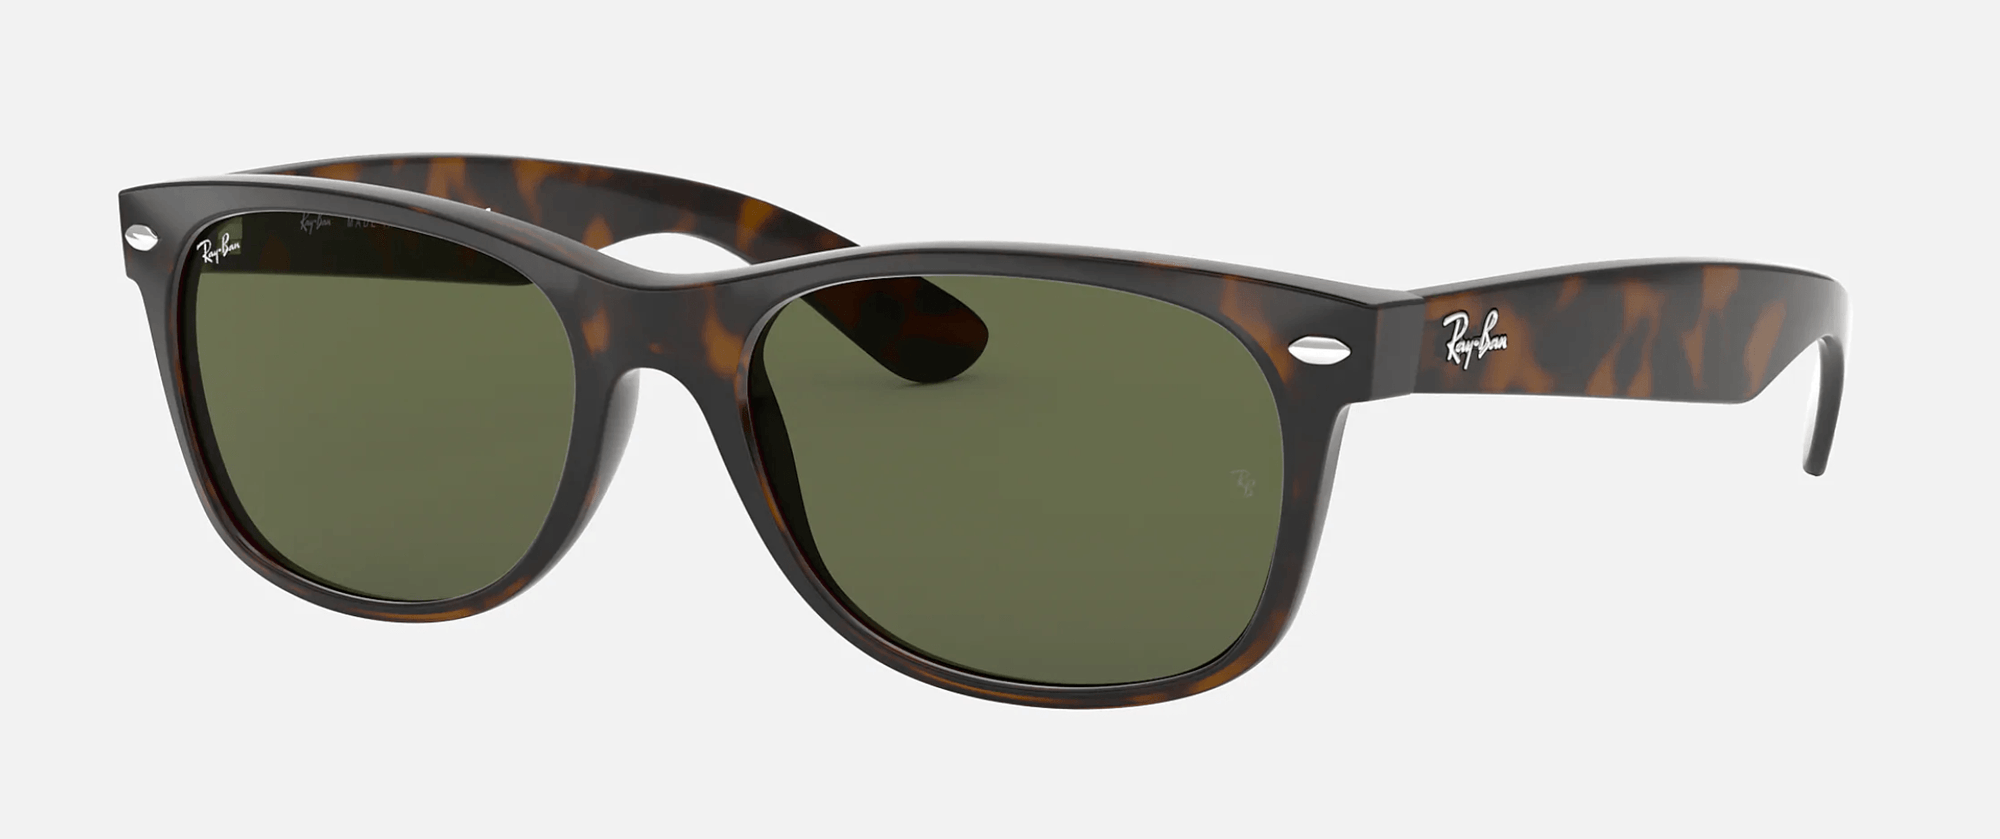 RAY-BAN New Wayfarer Tortoise - Green Classic G-15 Sunglasses SUNGLASSES - Ray-Ban Sunglasses Ray-Ban 